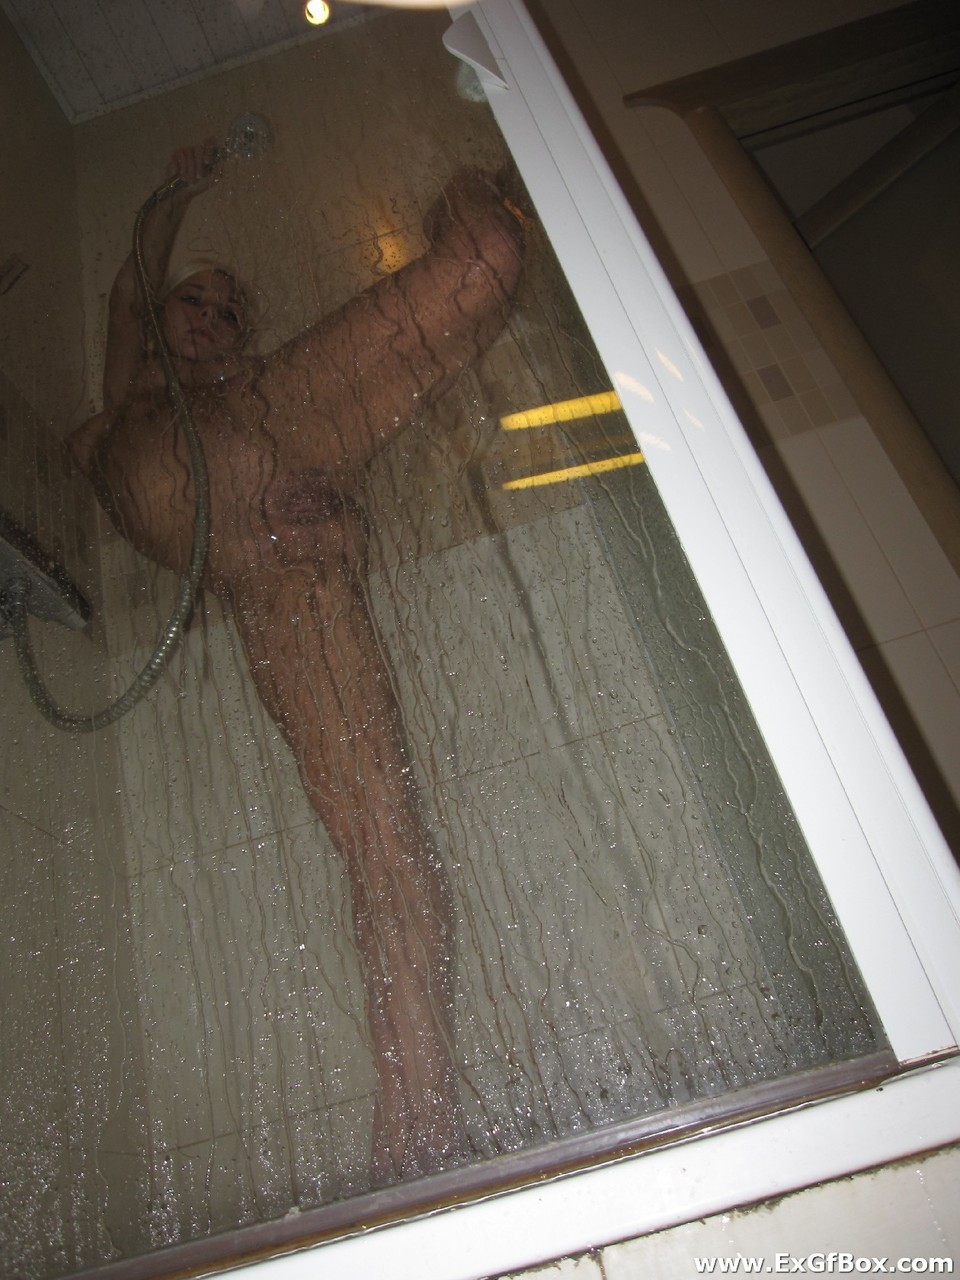 Ex girlfriend Lisa flaunts her sweet titties and hot ass in the shower 色情照片 #423746213 | Ex GF Box Pics, Betsey Kite, Shower, 手机色情